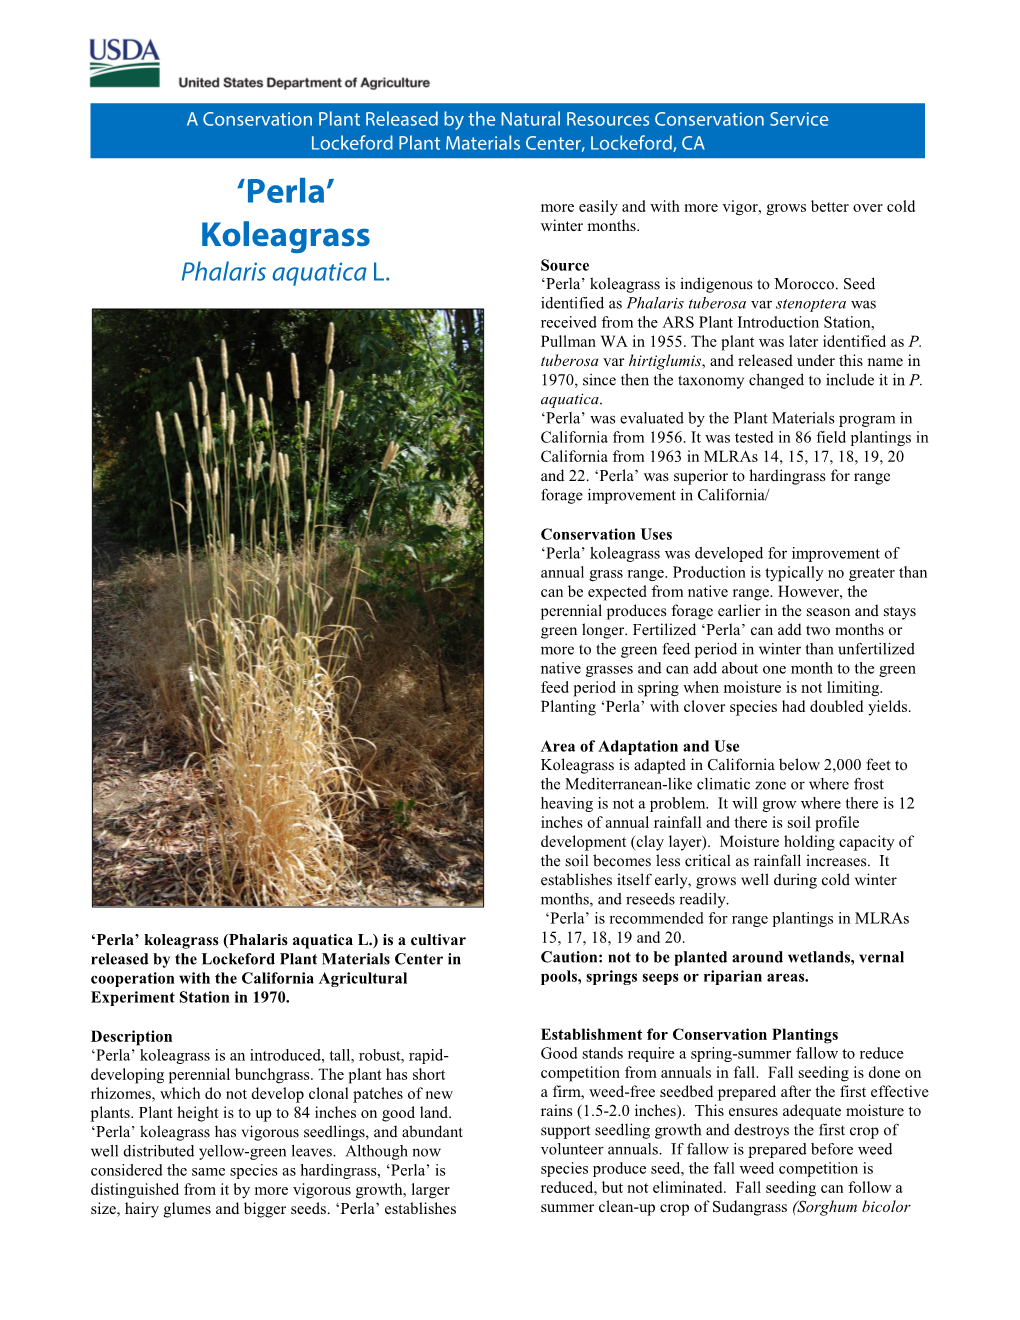 Conservation Plant Release Brochure for 'Perla', Koleagrass, Phalaris